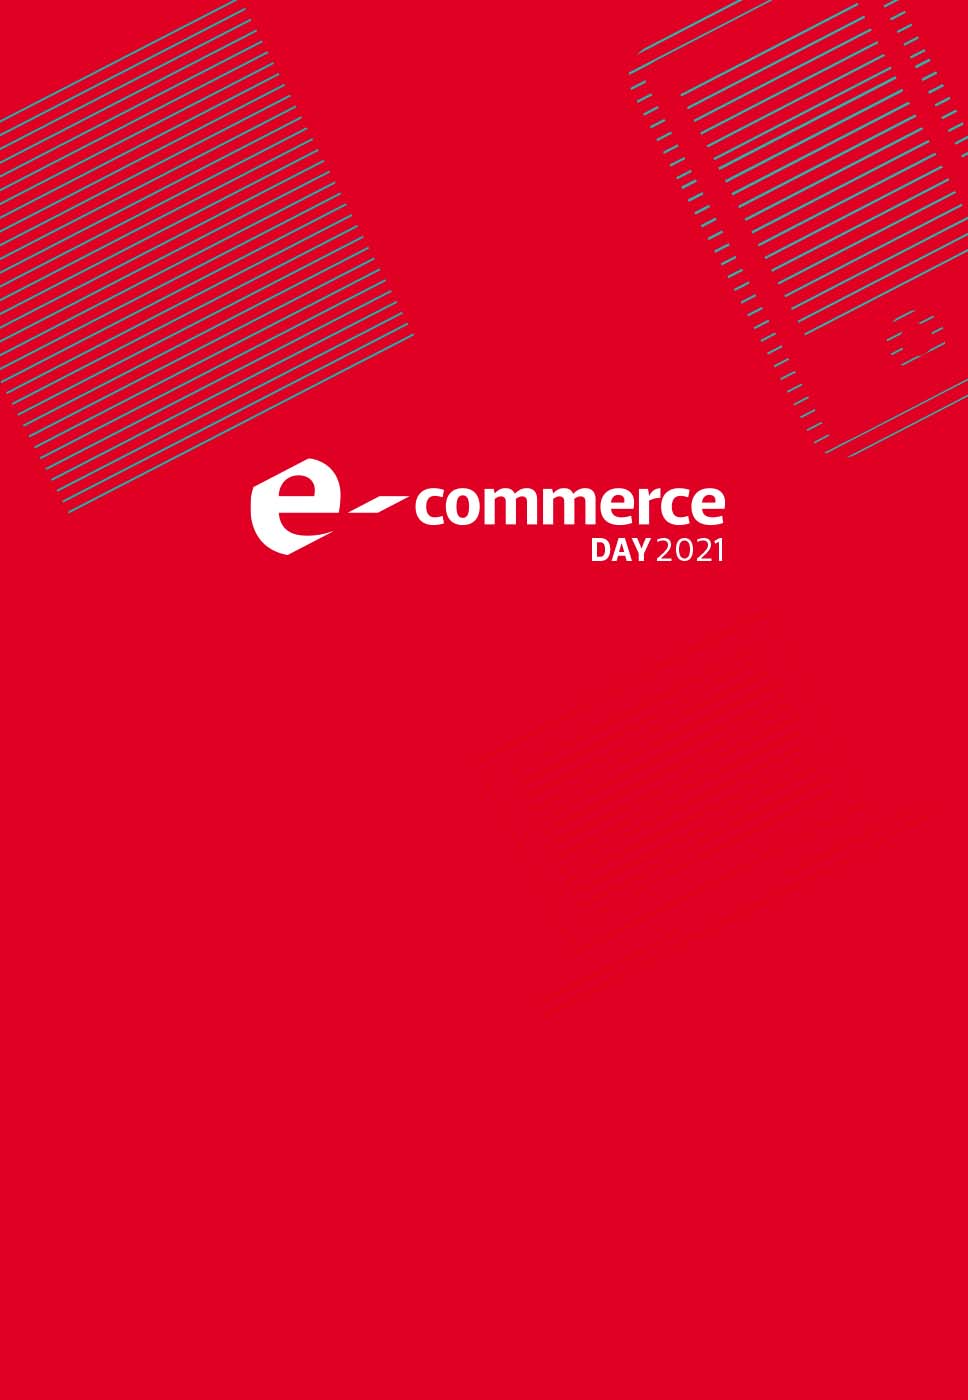 e-commerce day